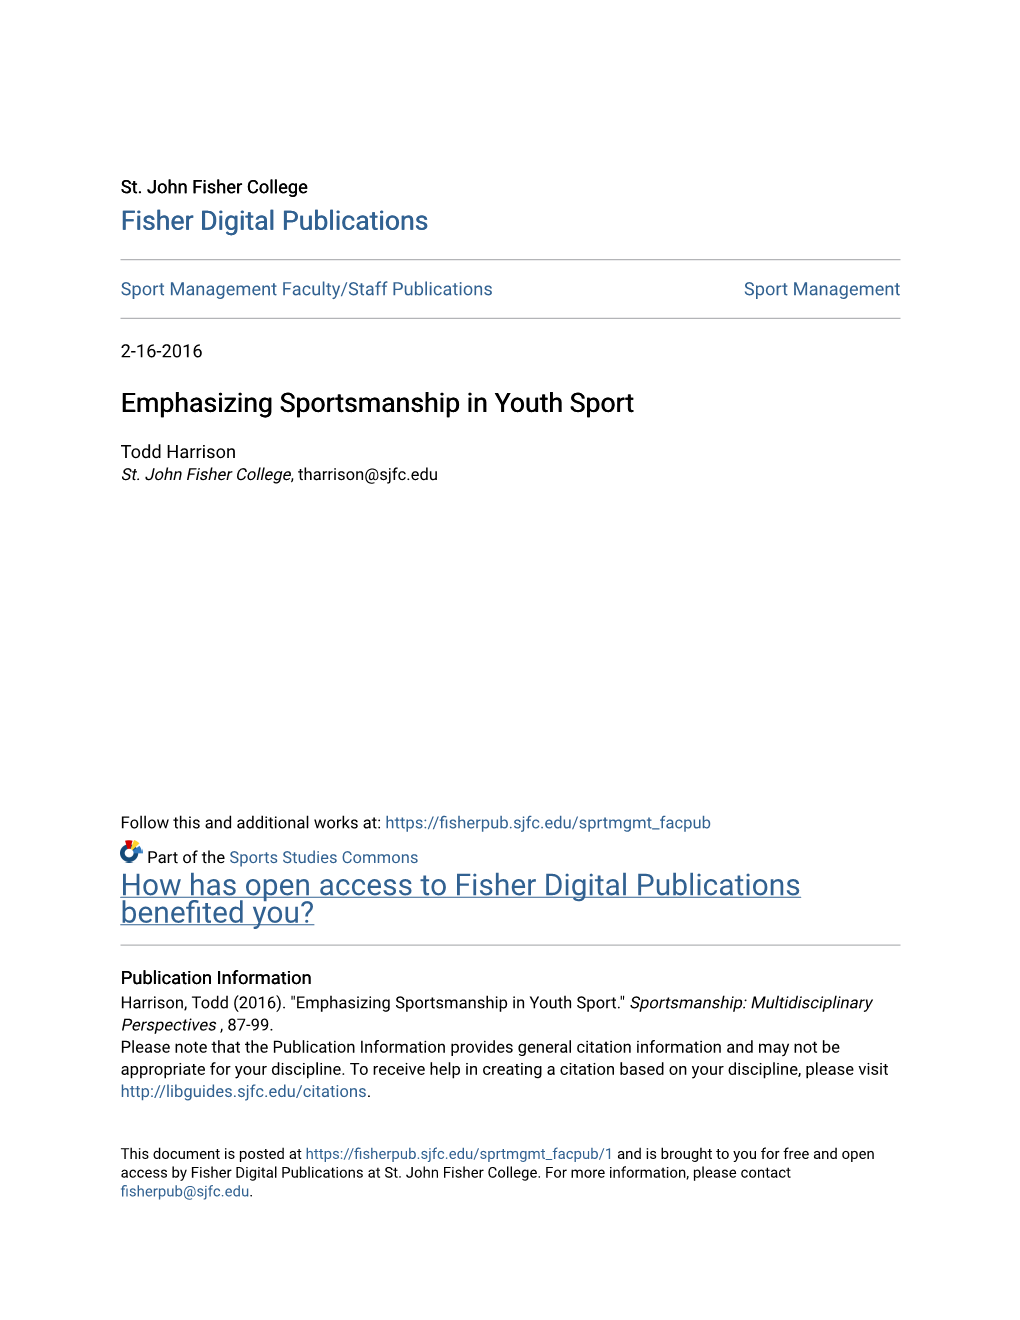 Emphasizing Sportsmanship in Youth Sport